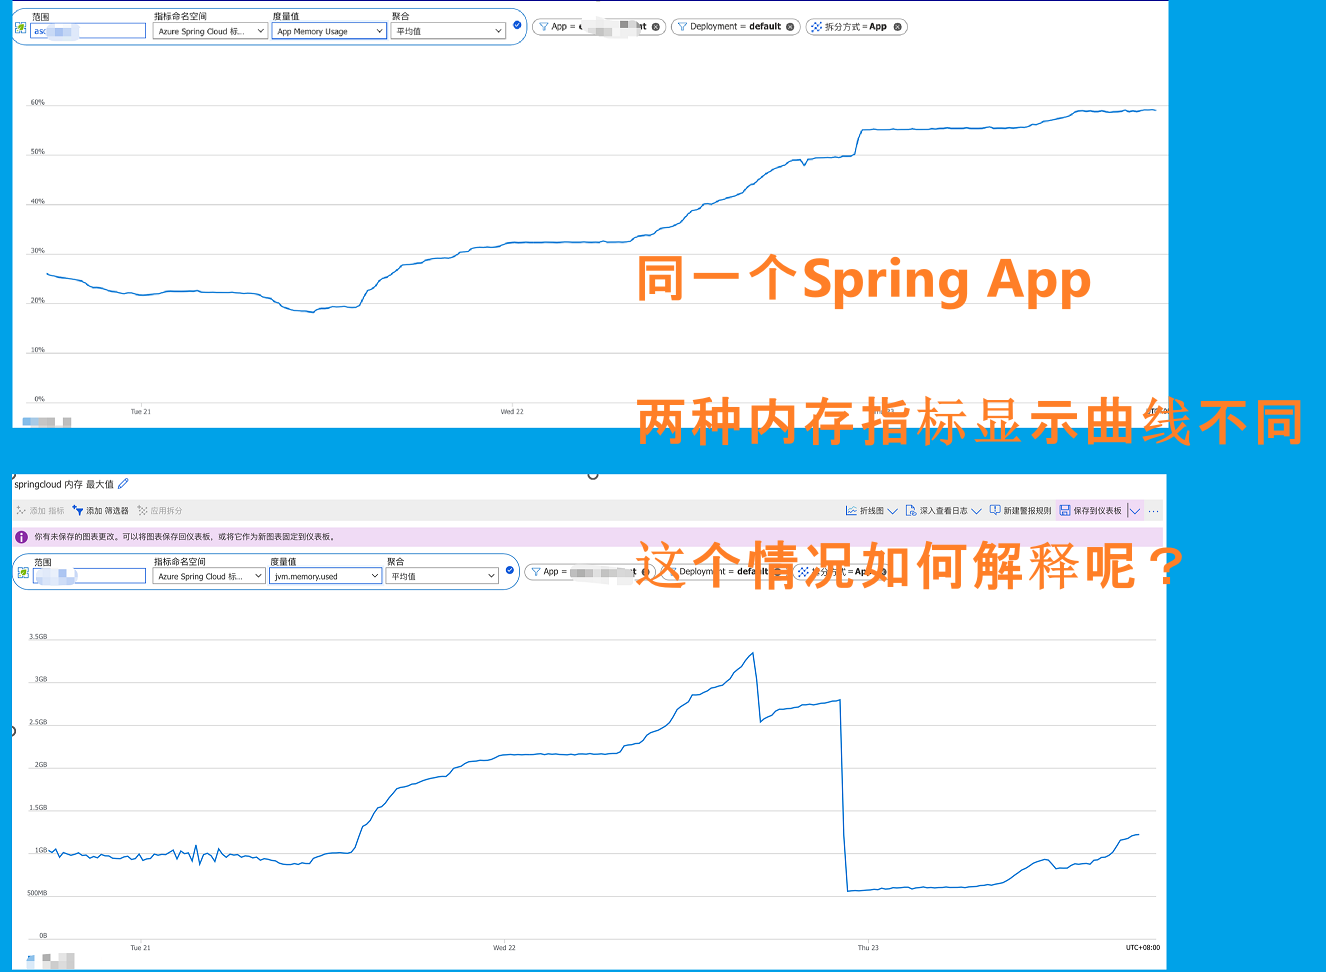 【Azure Spring Cloud】在Azure Spring Apps上看见 App Memory Usage 和 jvm.menory.use 的指标的疑问及OOM